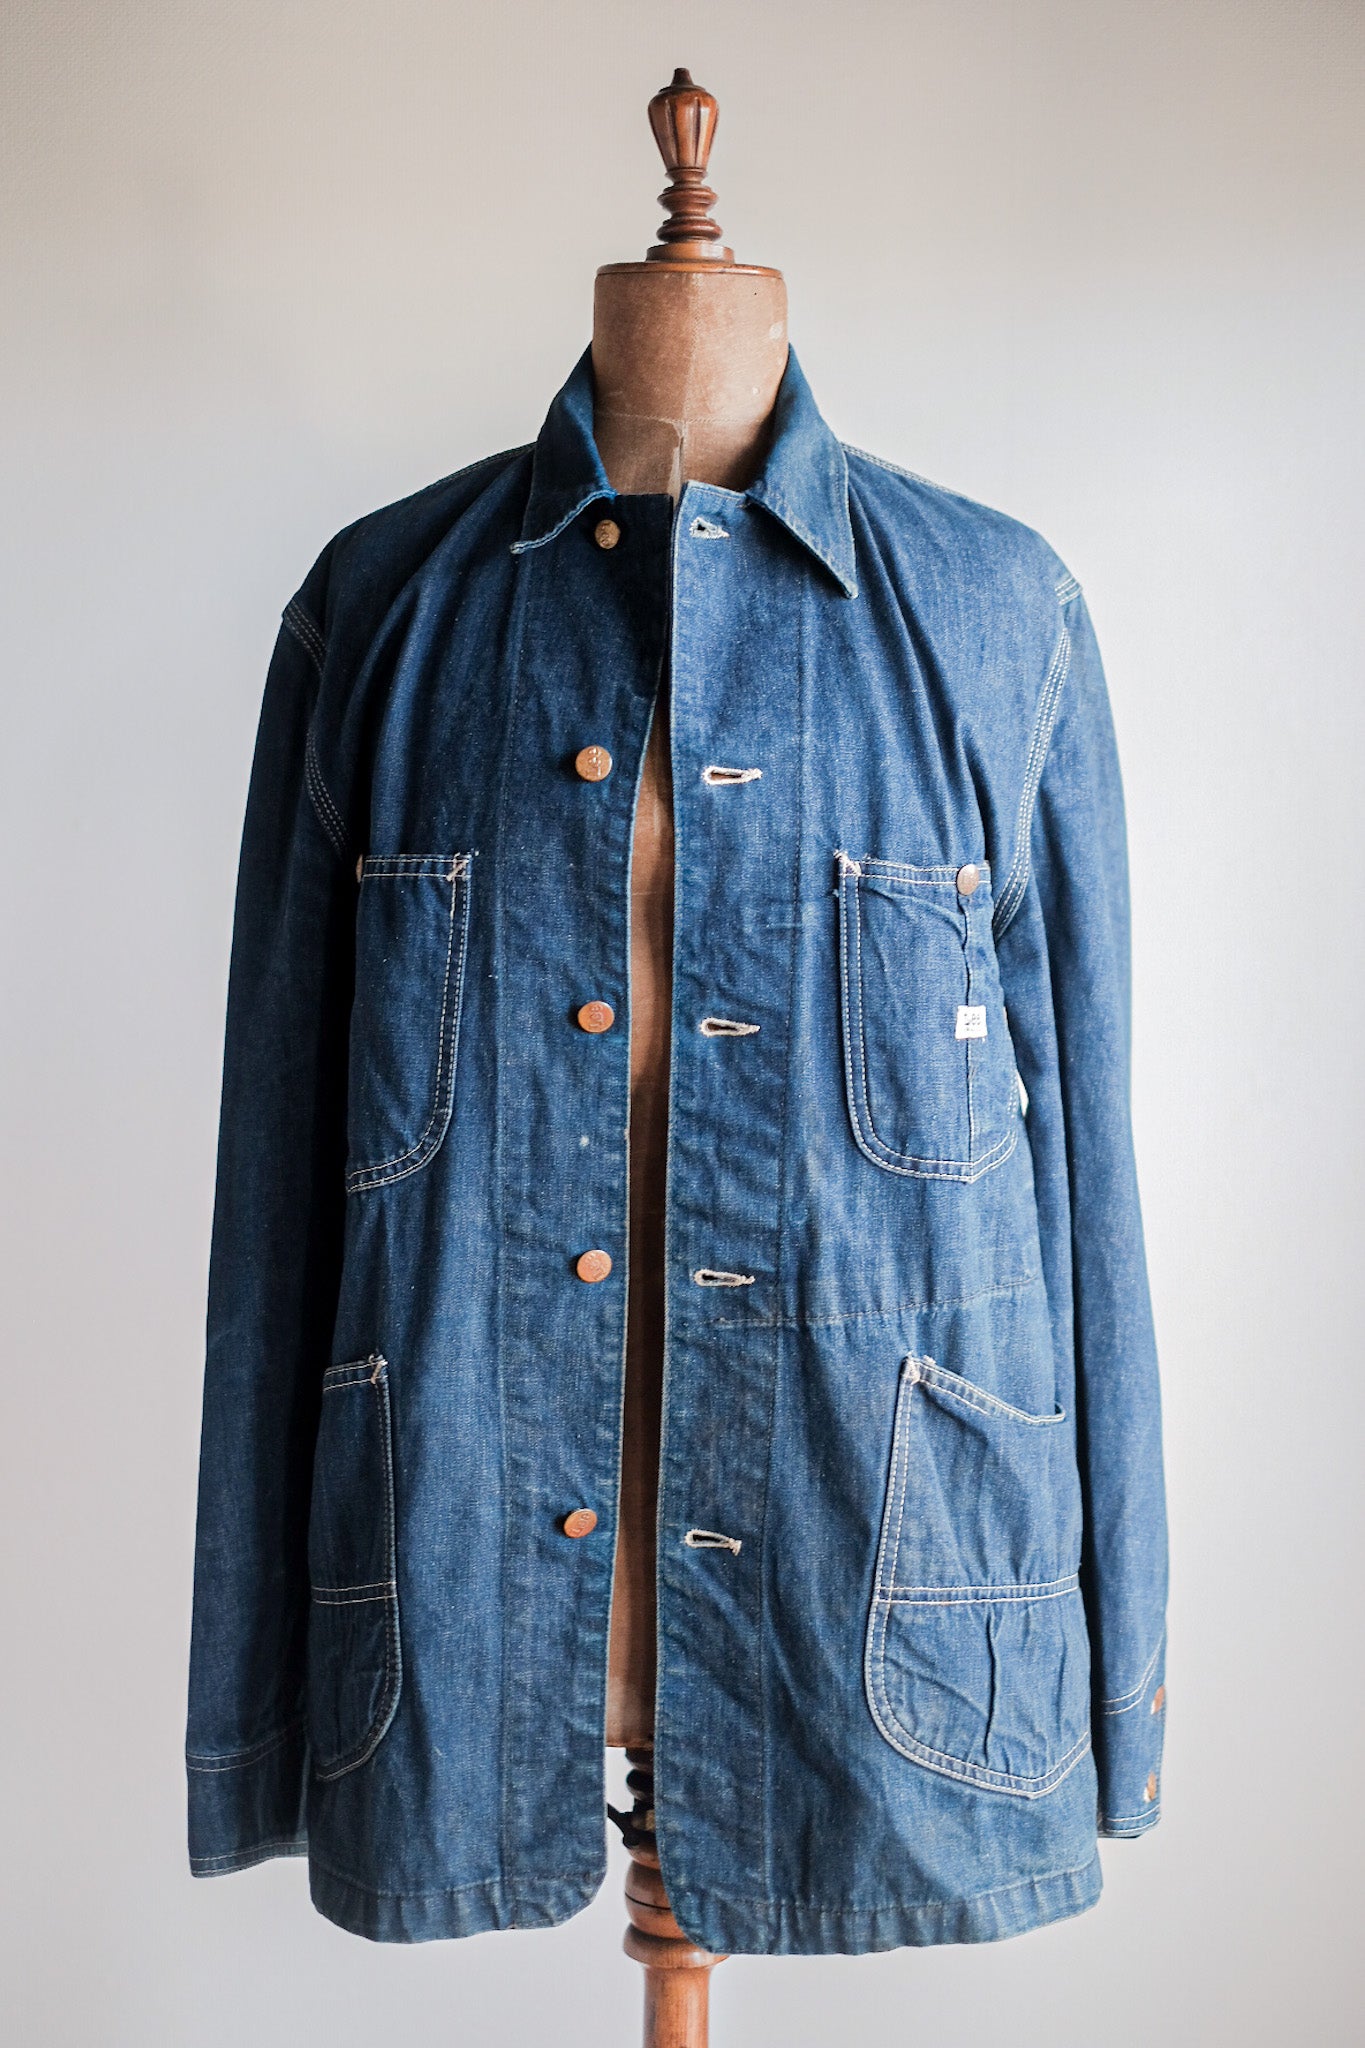 [~ 70's] Vintage Lee 91-J Taille de la veste en denim.38R